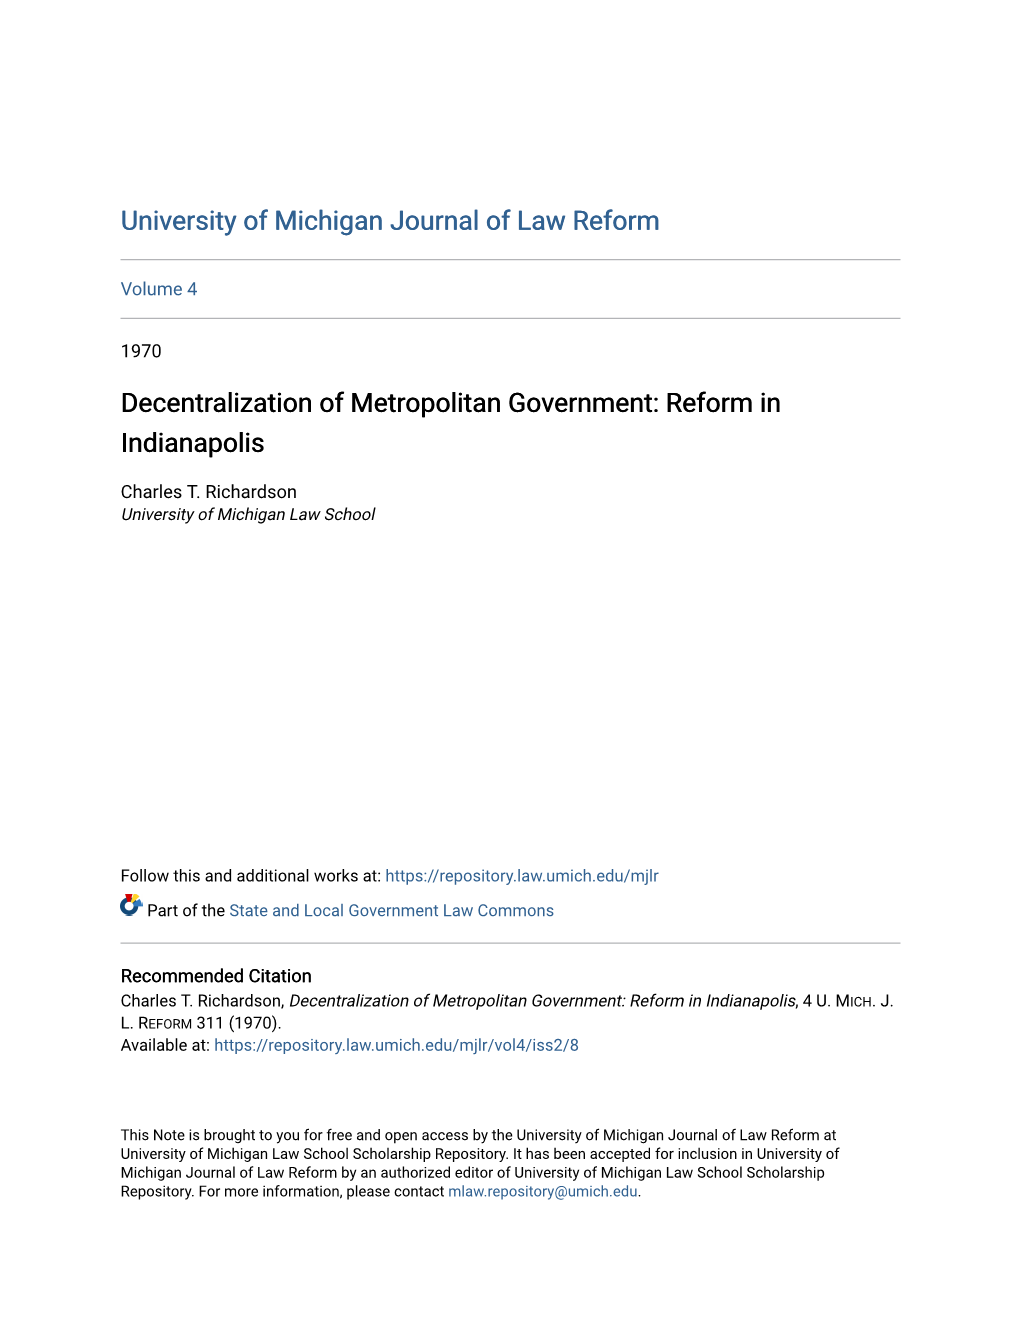 Decentralization of Metropolitan Government: Reform in Indianapolis